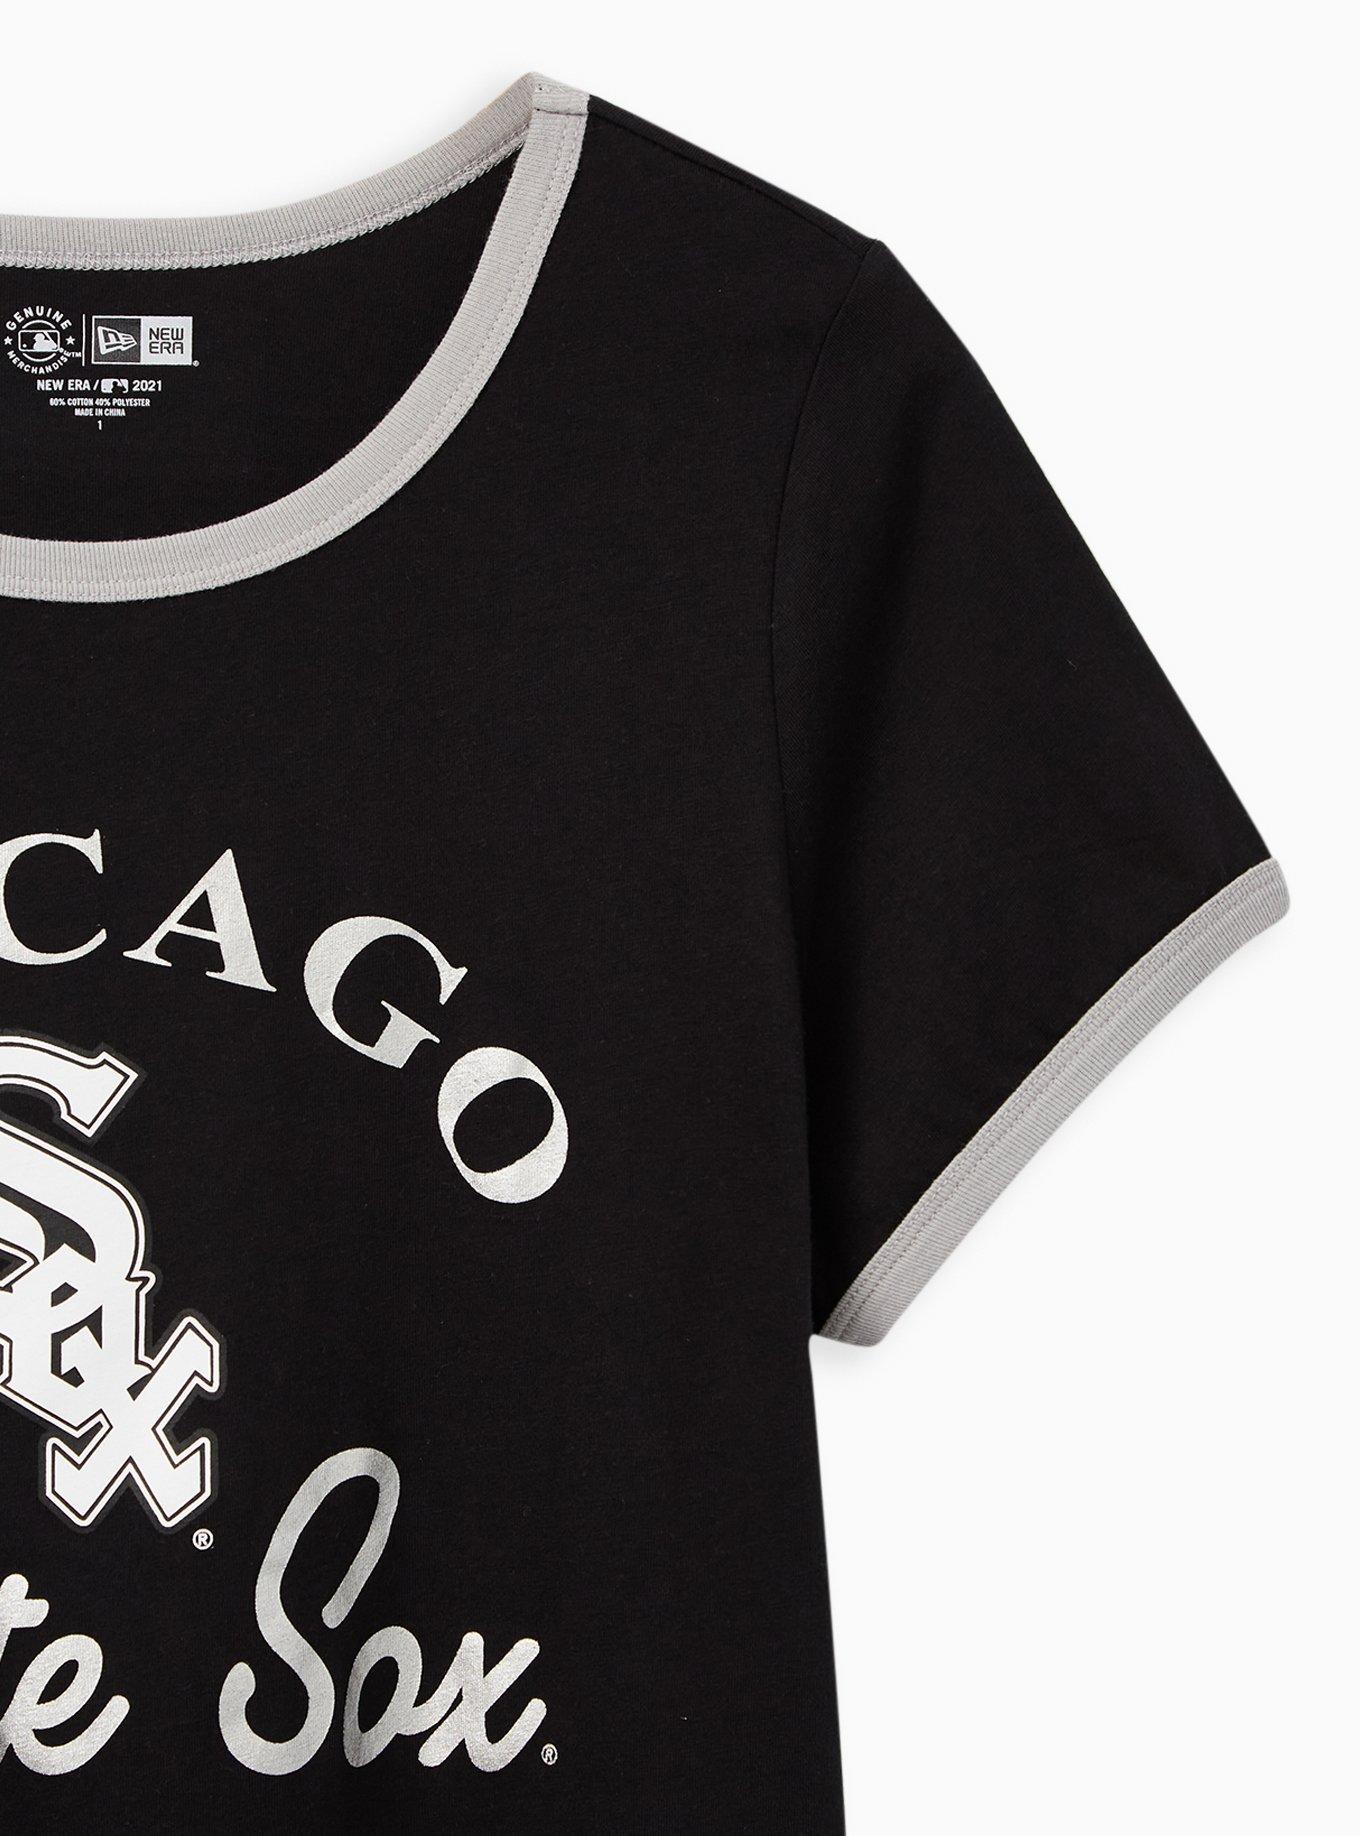 Vintage 00s Grey MLB White Sox Chicago T-Shirt - XX-Large Cotton